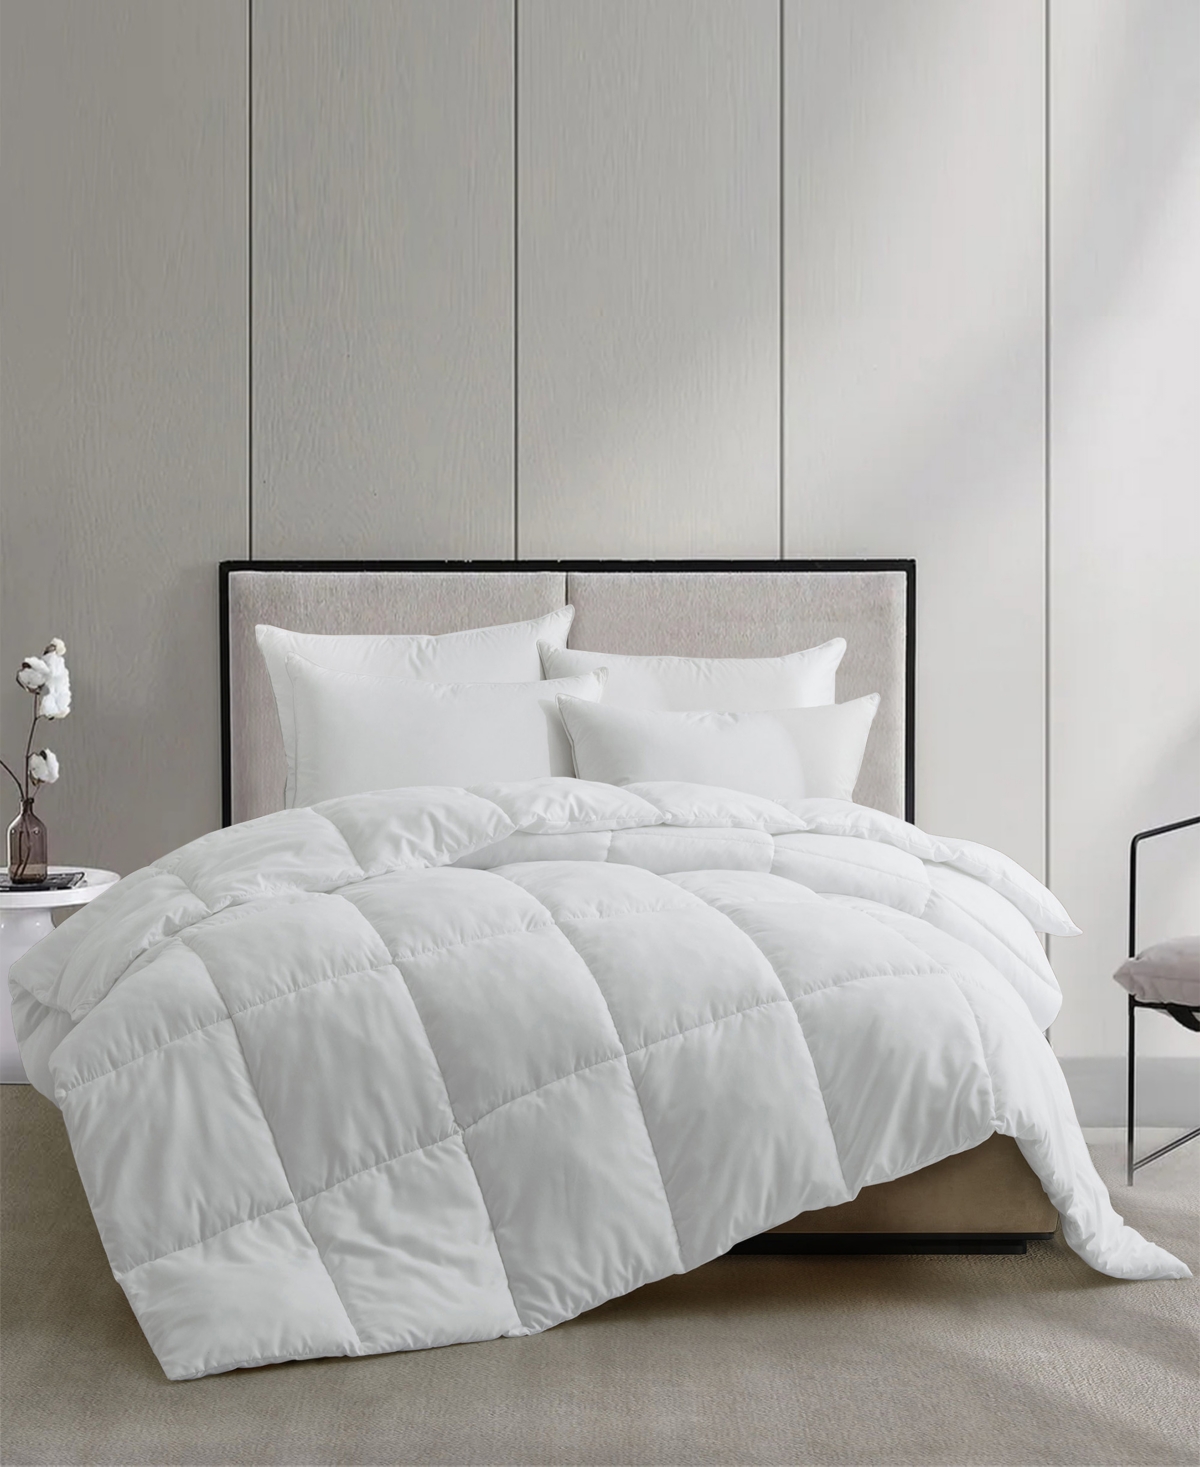 Unikome Light Warmth Reversible Down Alternative Comforter, Queen In White